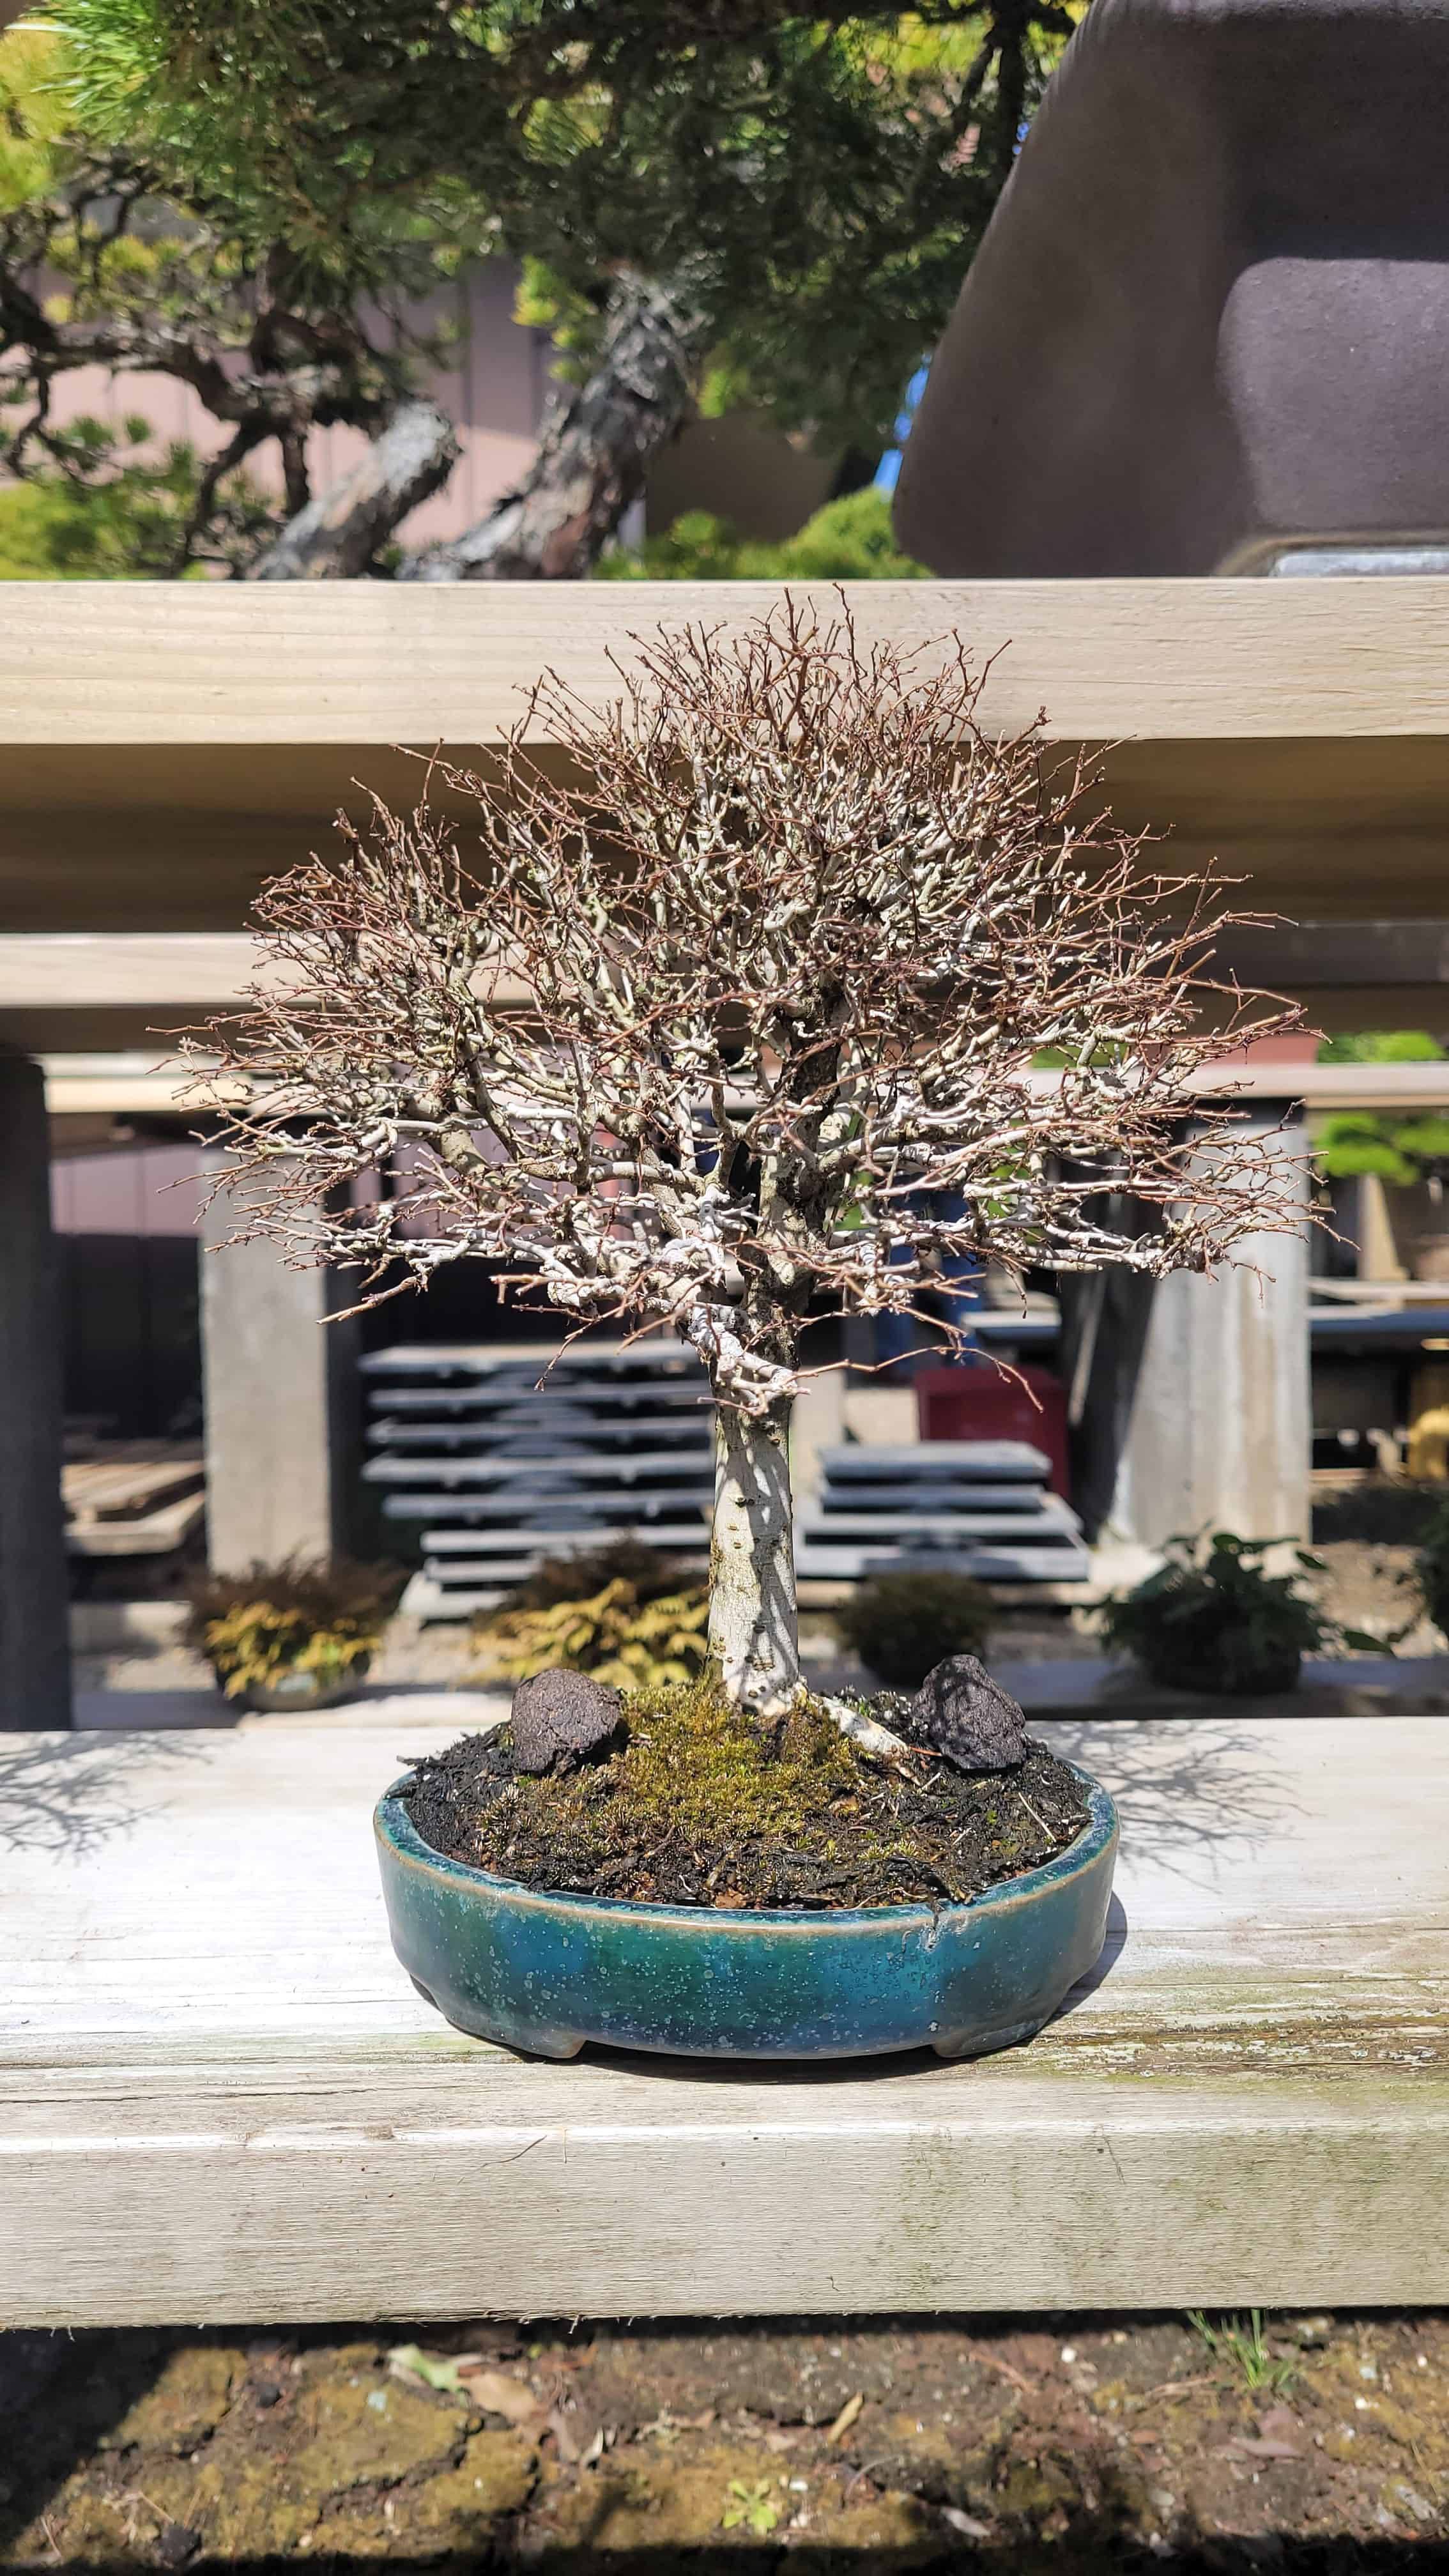 A maple bonsai tree from kimura in Japan